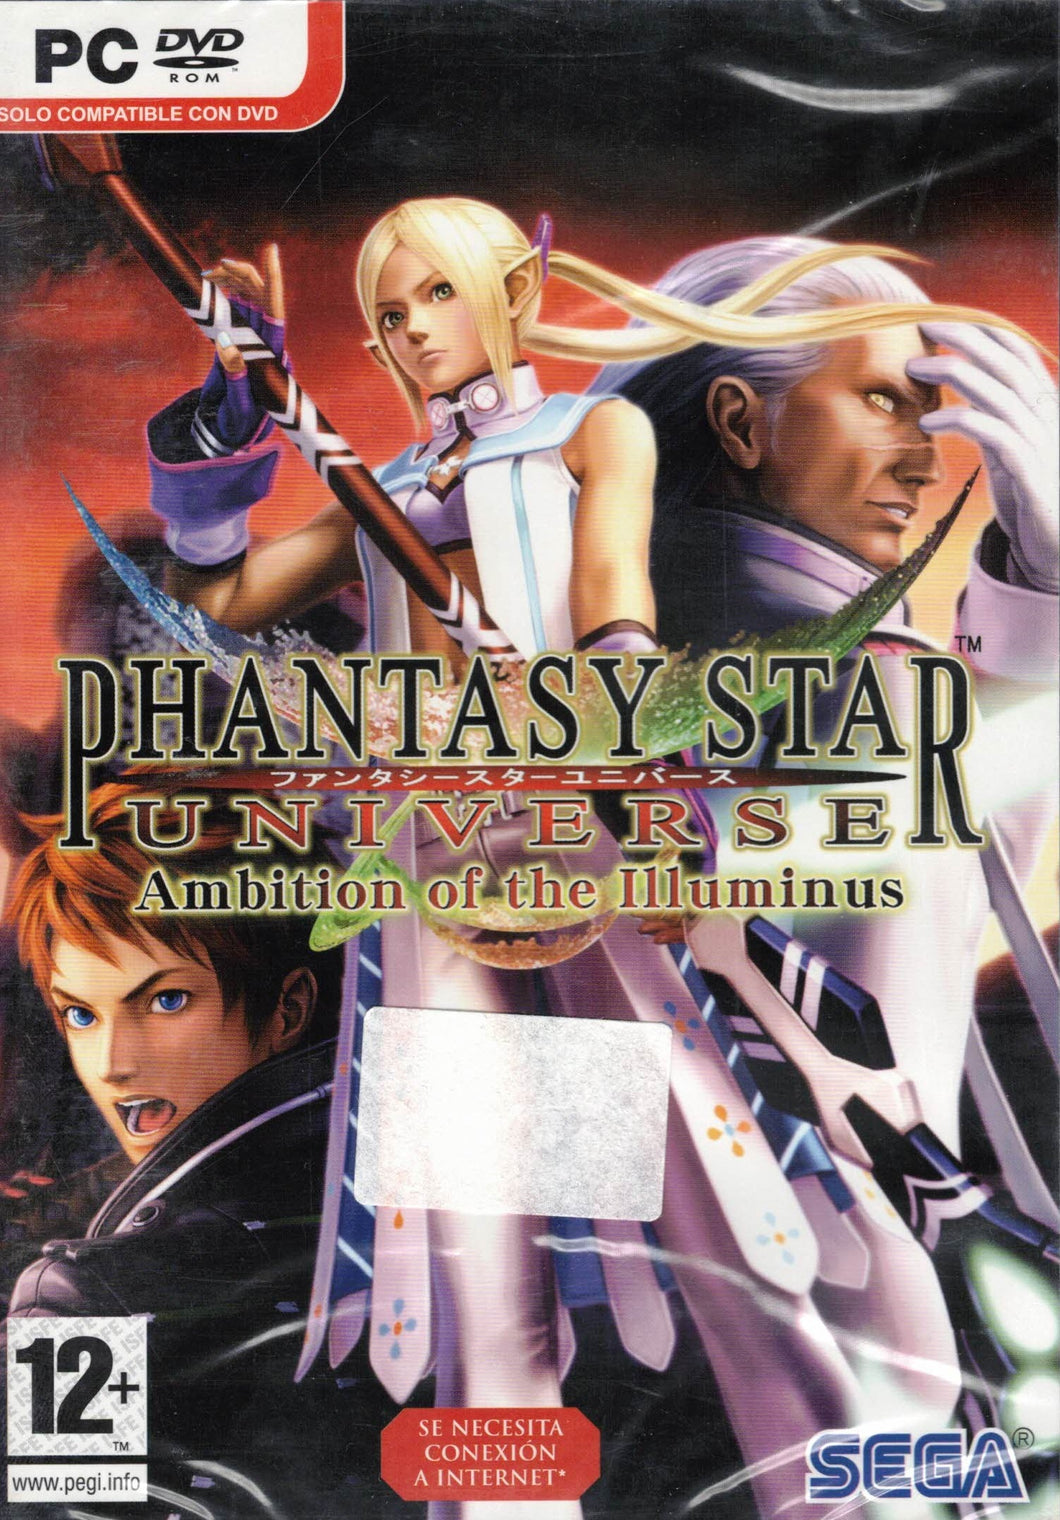 Phantasy Star Universe Ambition of the Illuminus (PC-DVD)(NUEVO)